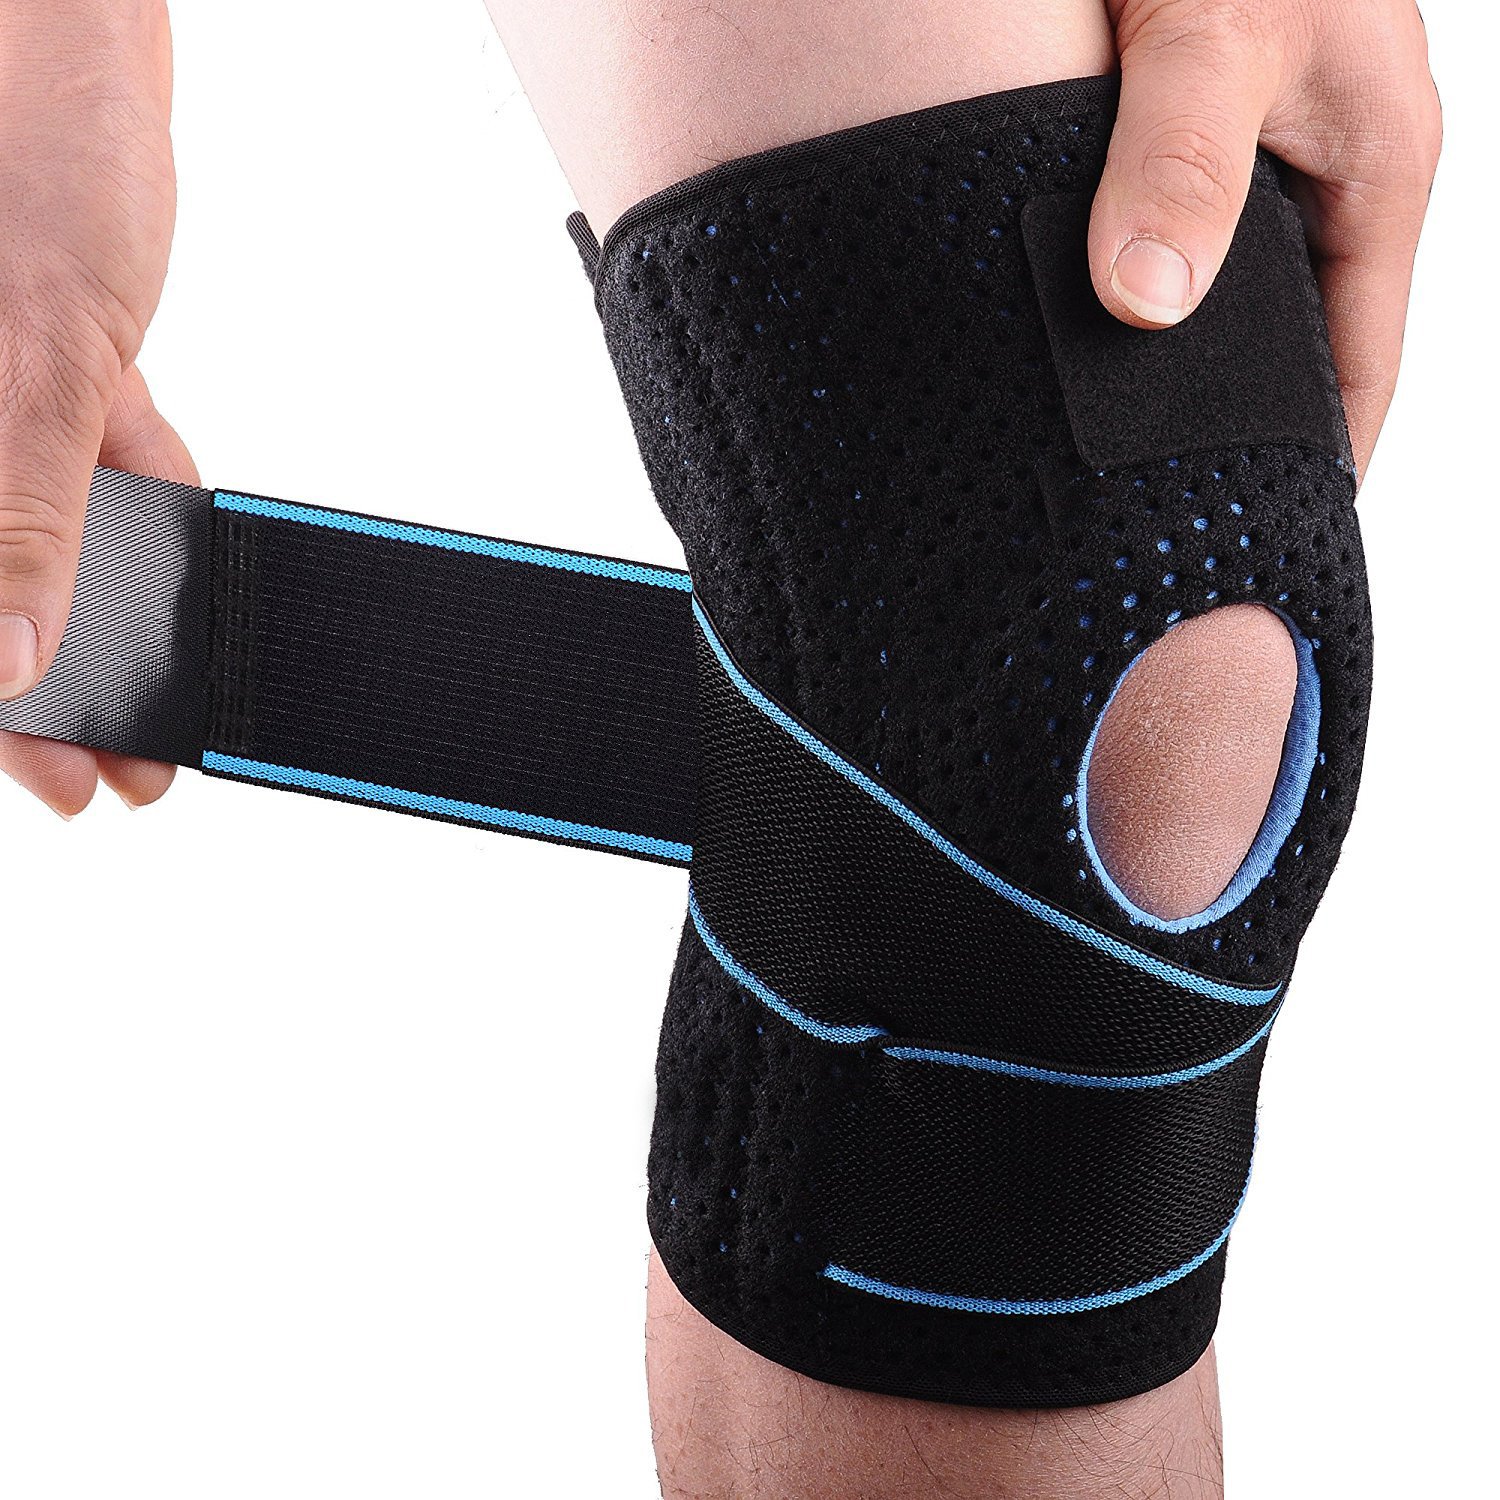 Knee brace for arthritis, ACL and meniscus tear,Open